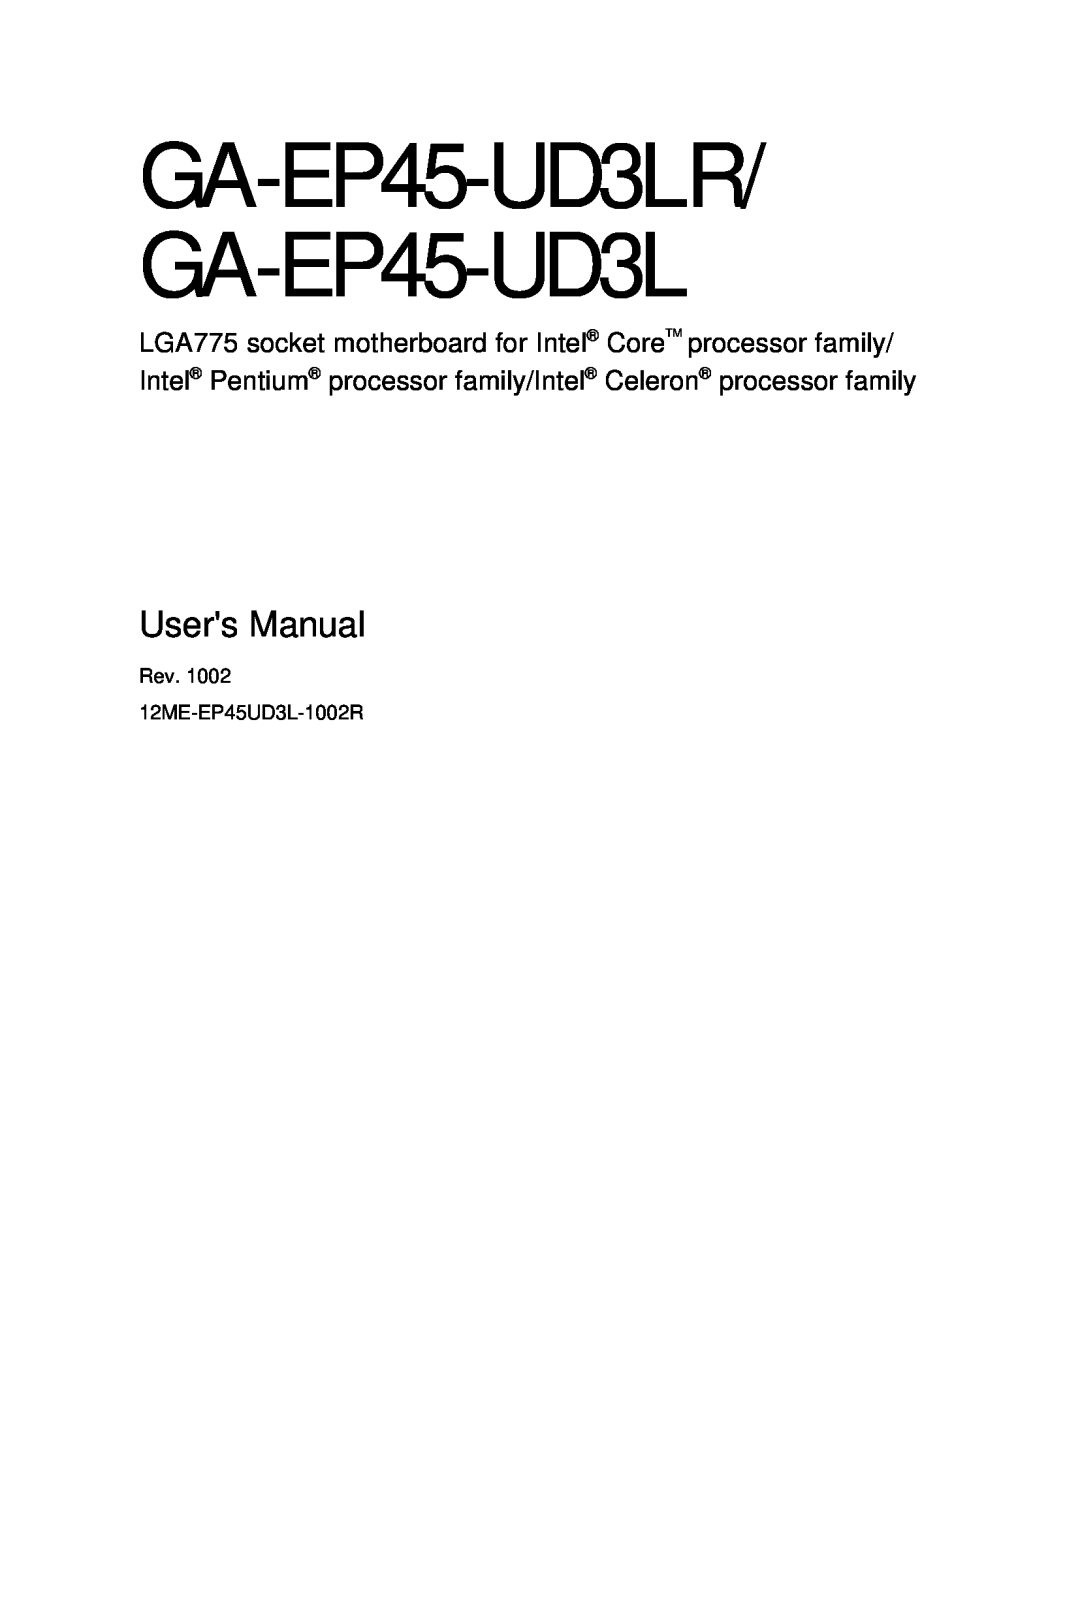 Gigabyte user manual GA-EP45-UD3LR/ GA-EP45-UD3L, Users Manual 